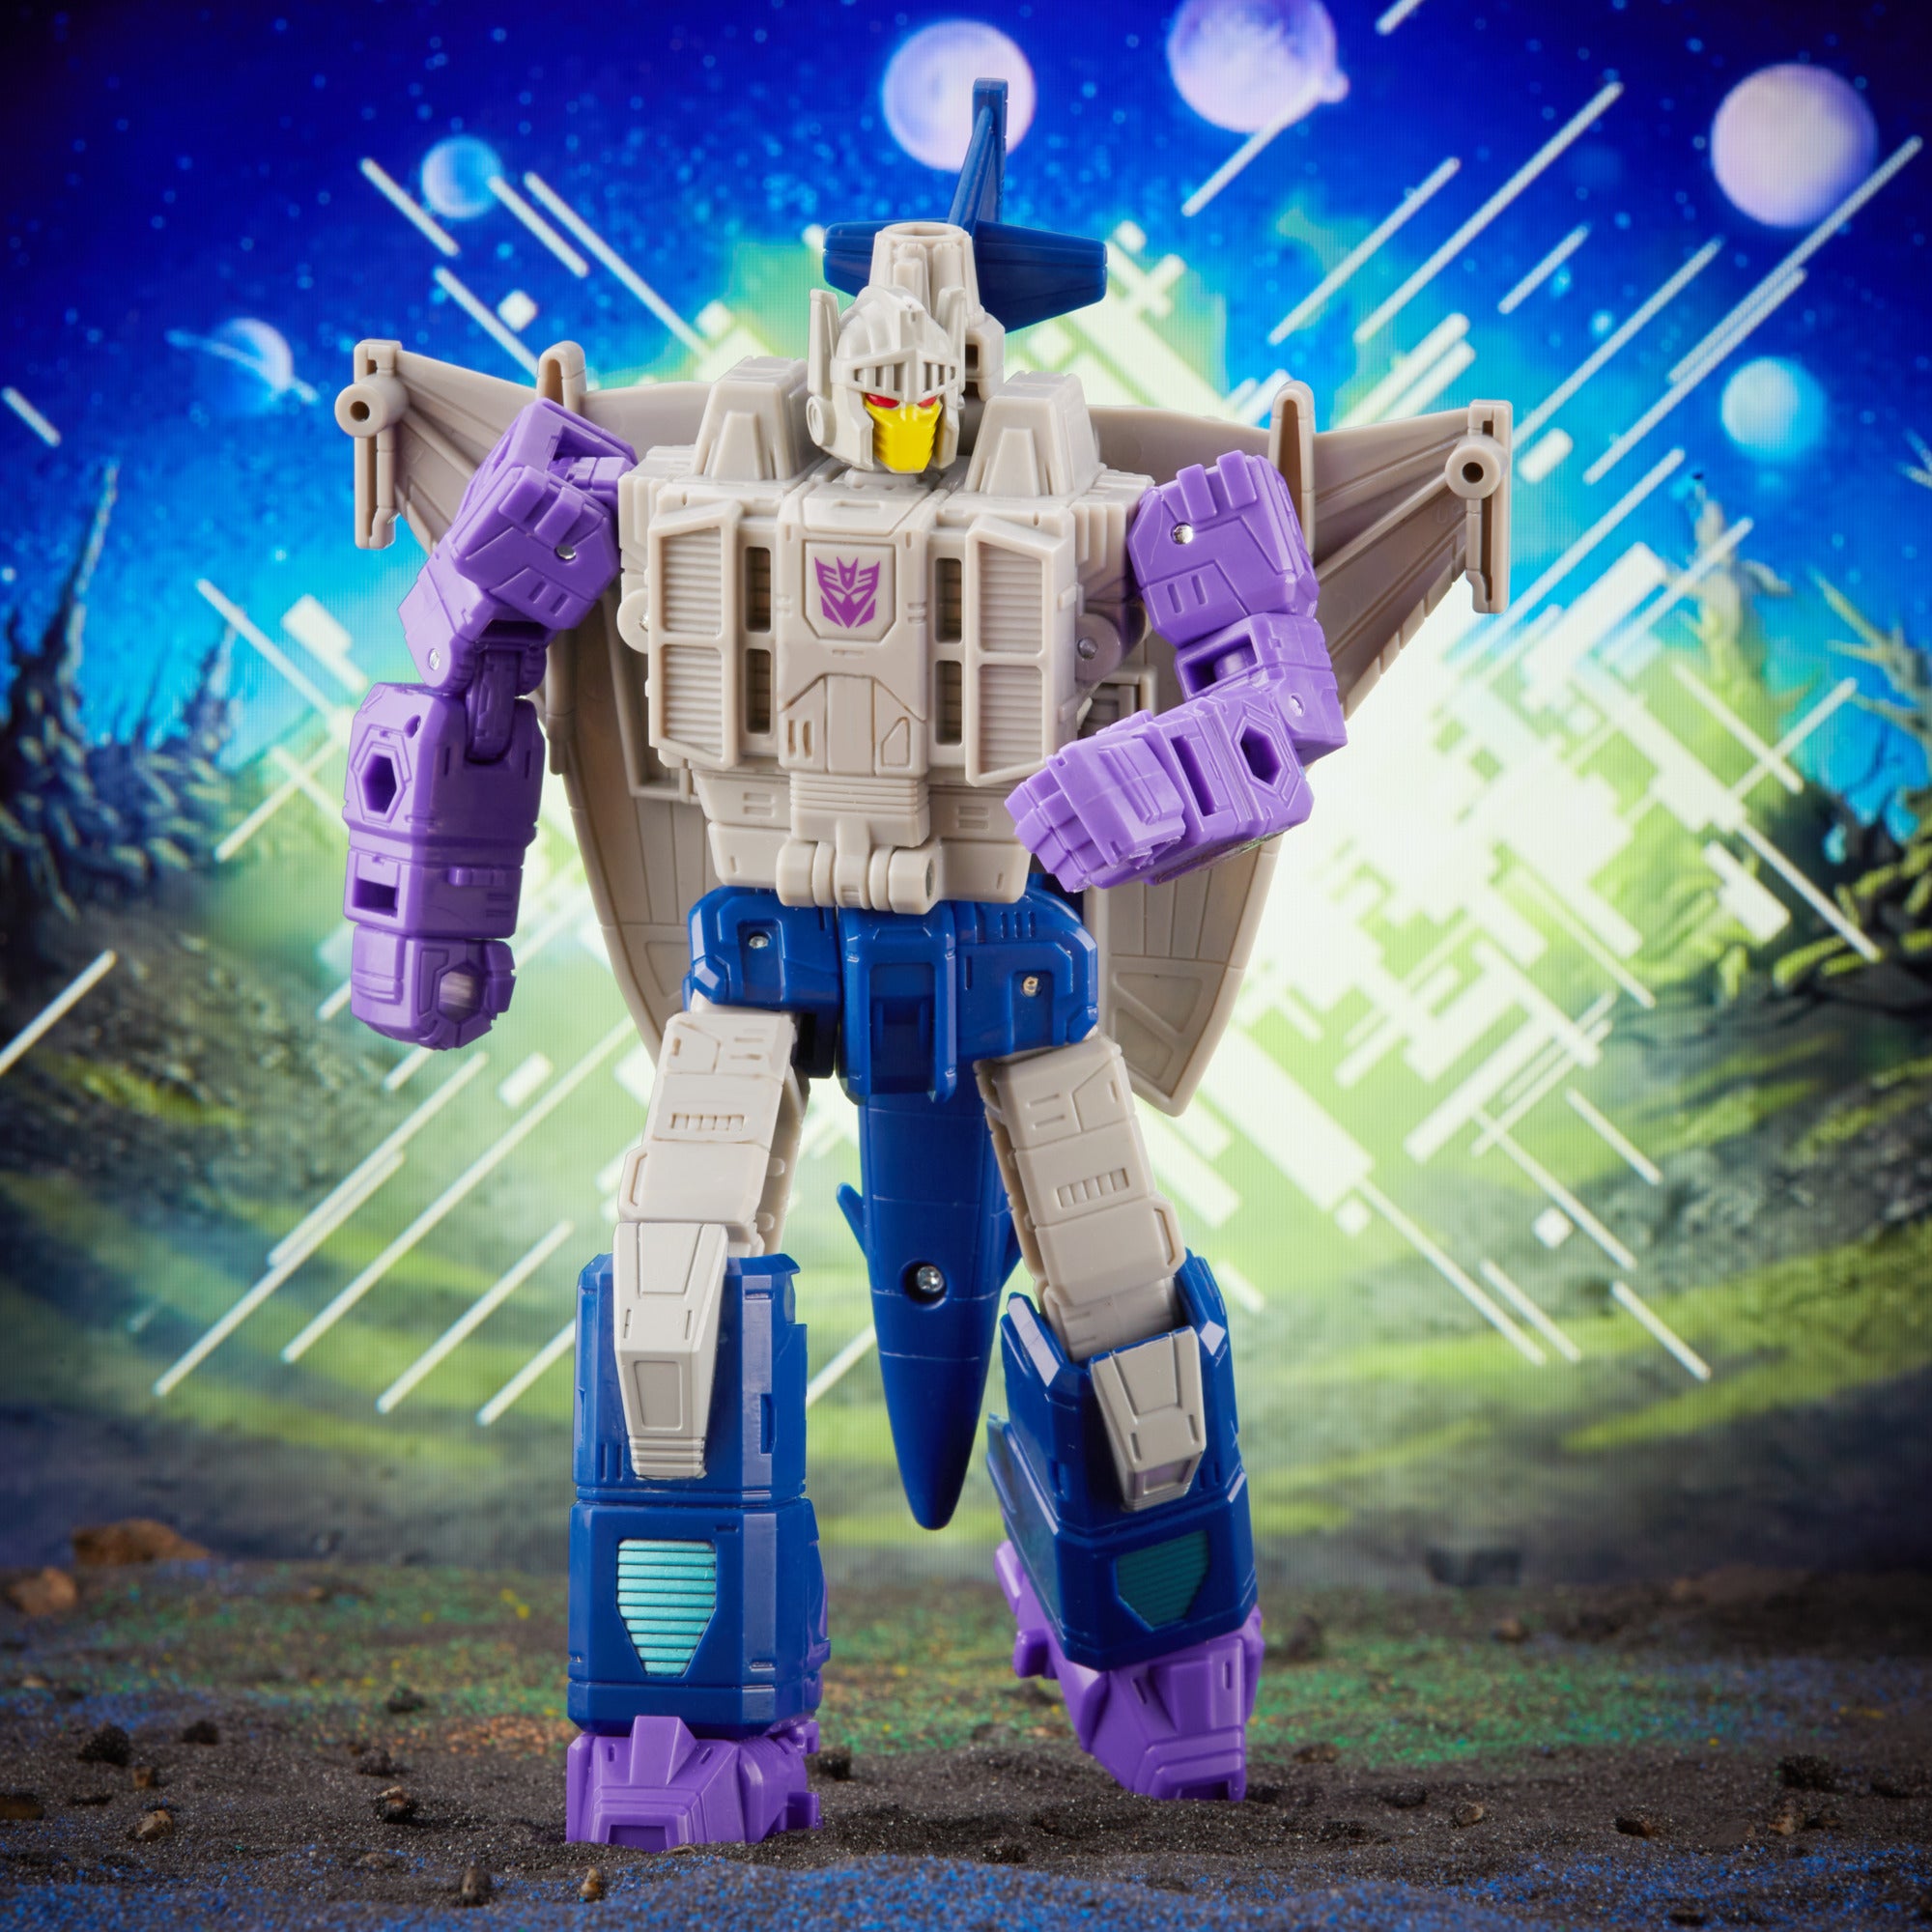 Transformers Legacy Evolution Transmetal II Megatron – Hasbro Pulse